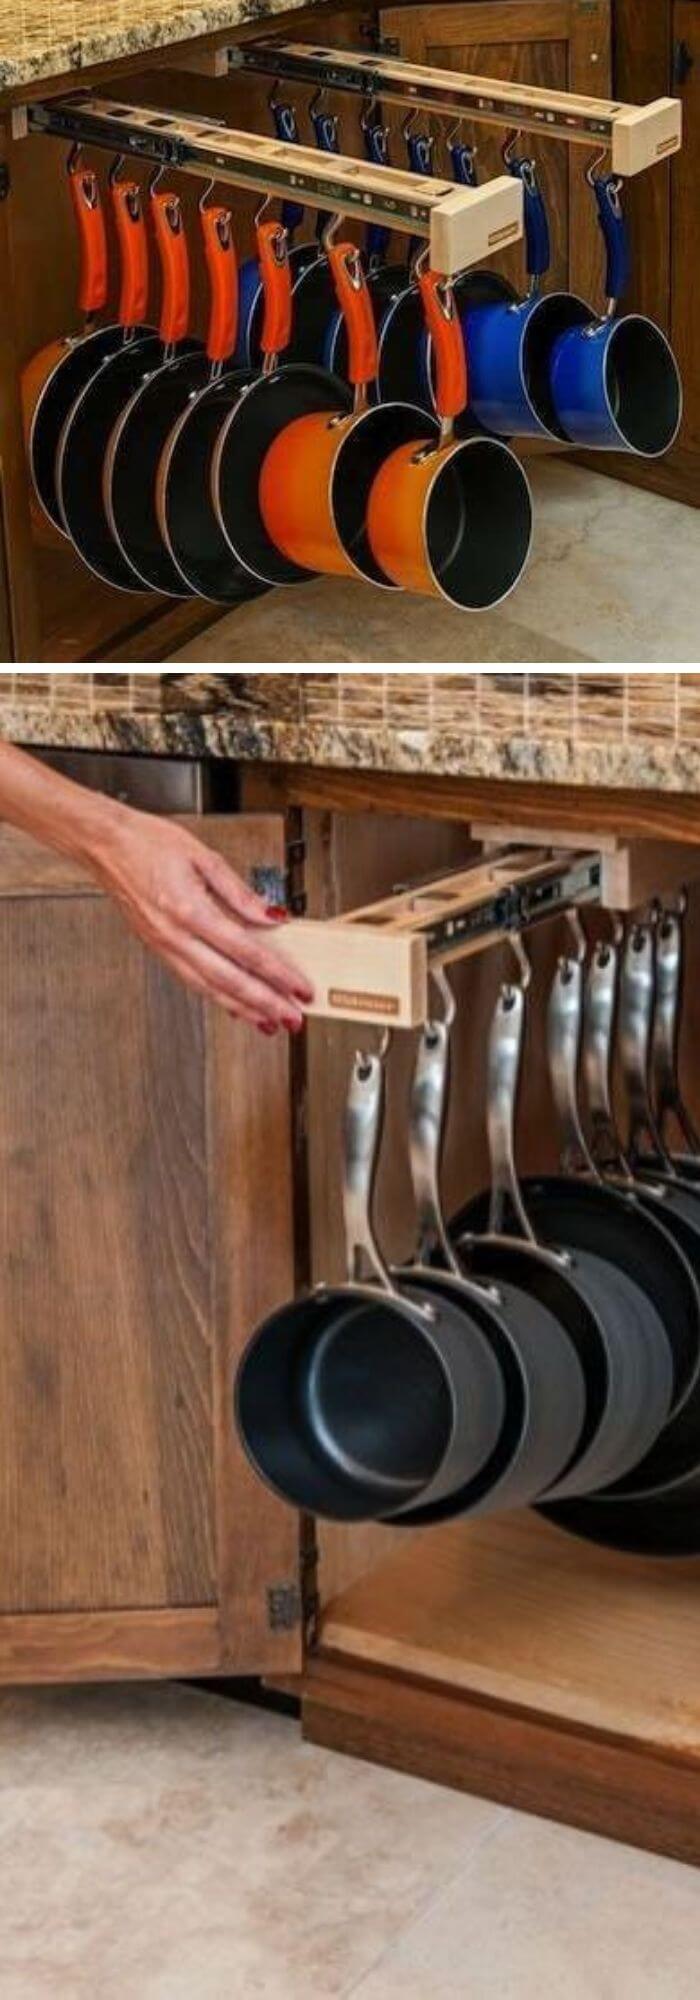 10 small kitchen storage ideas